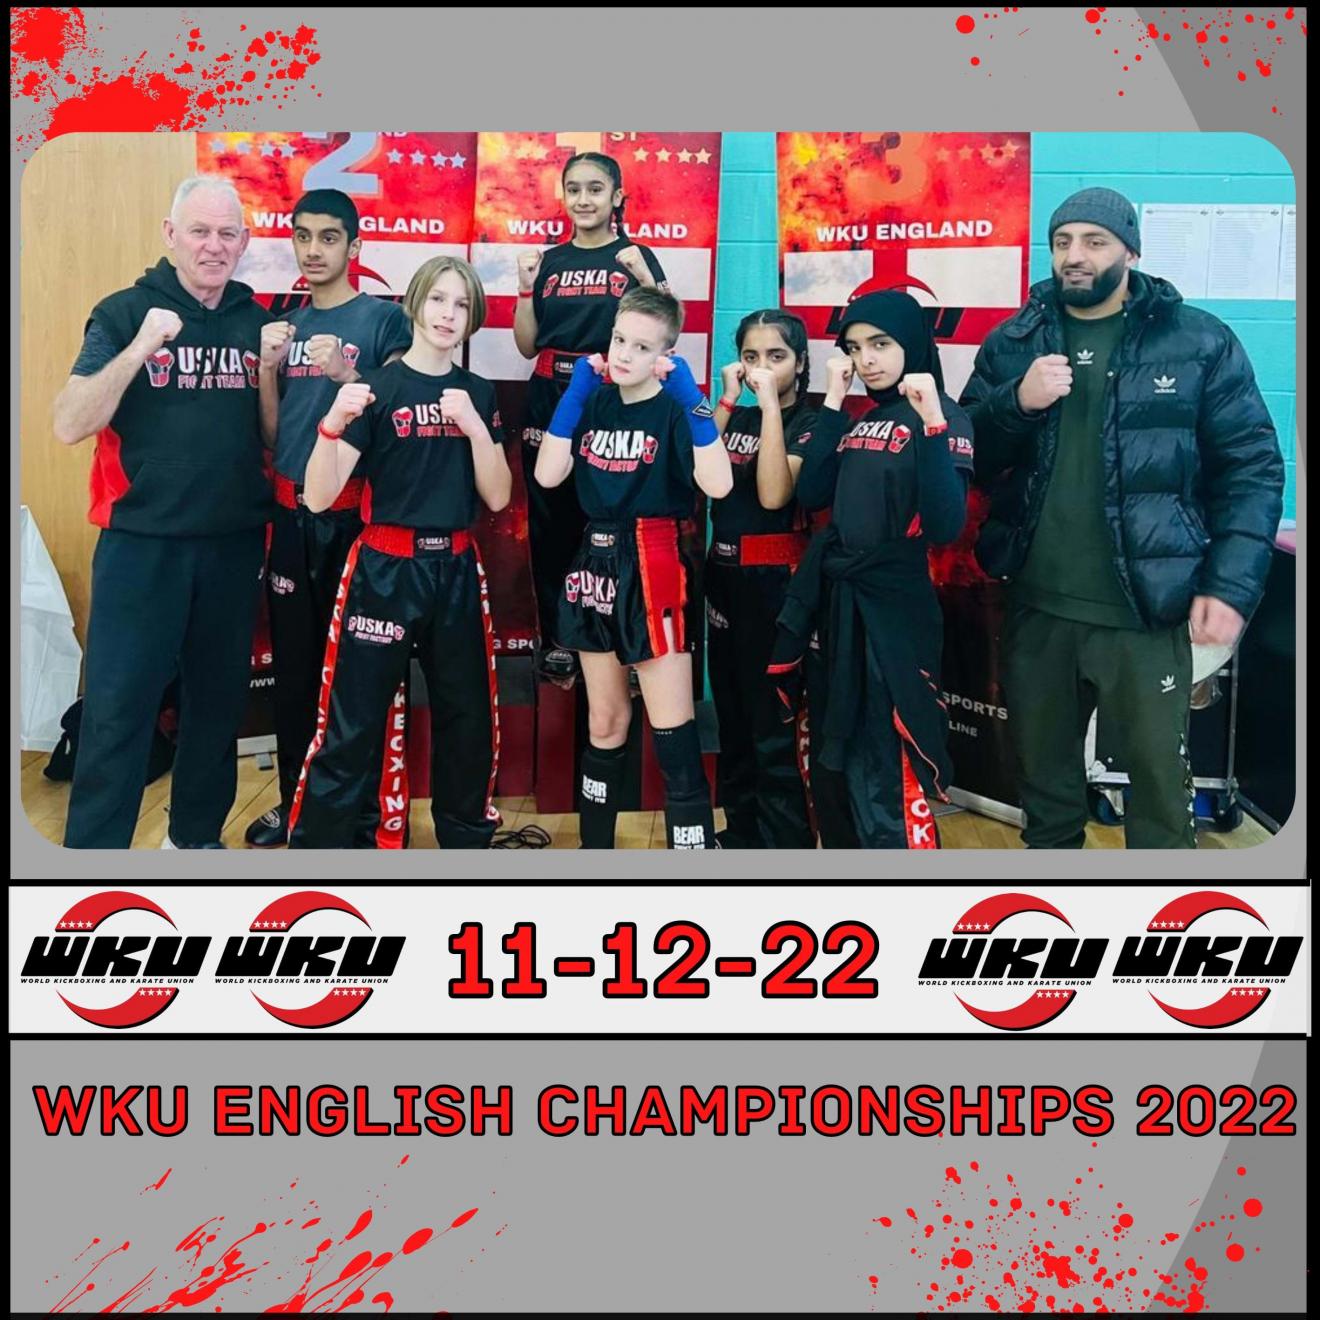 11-12-22 - 7 USKA Fighters Shine at the WKU English Championships 2022